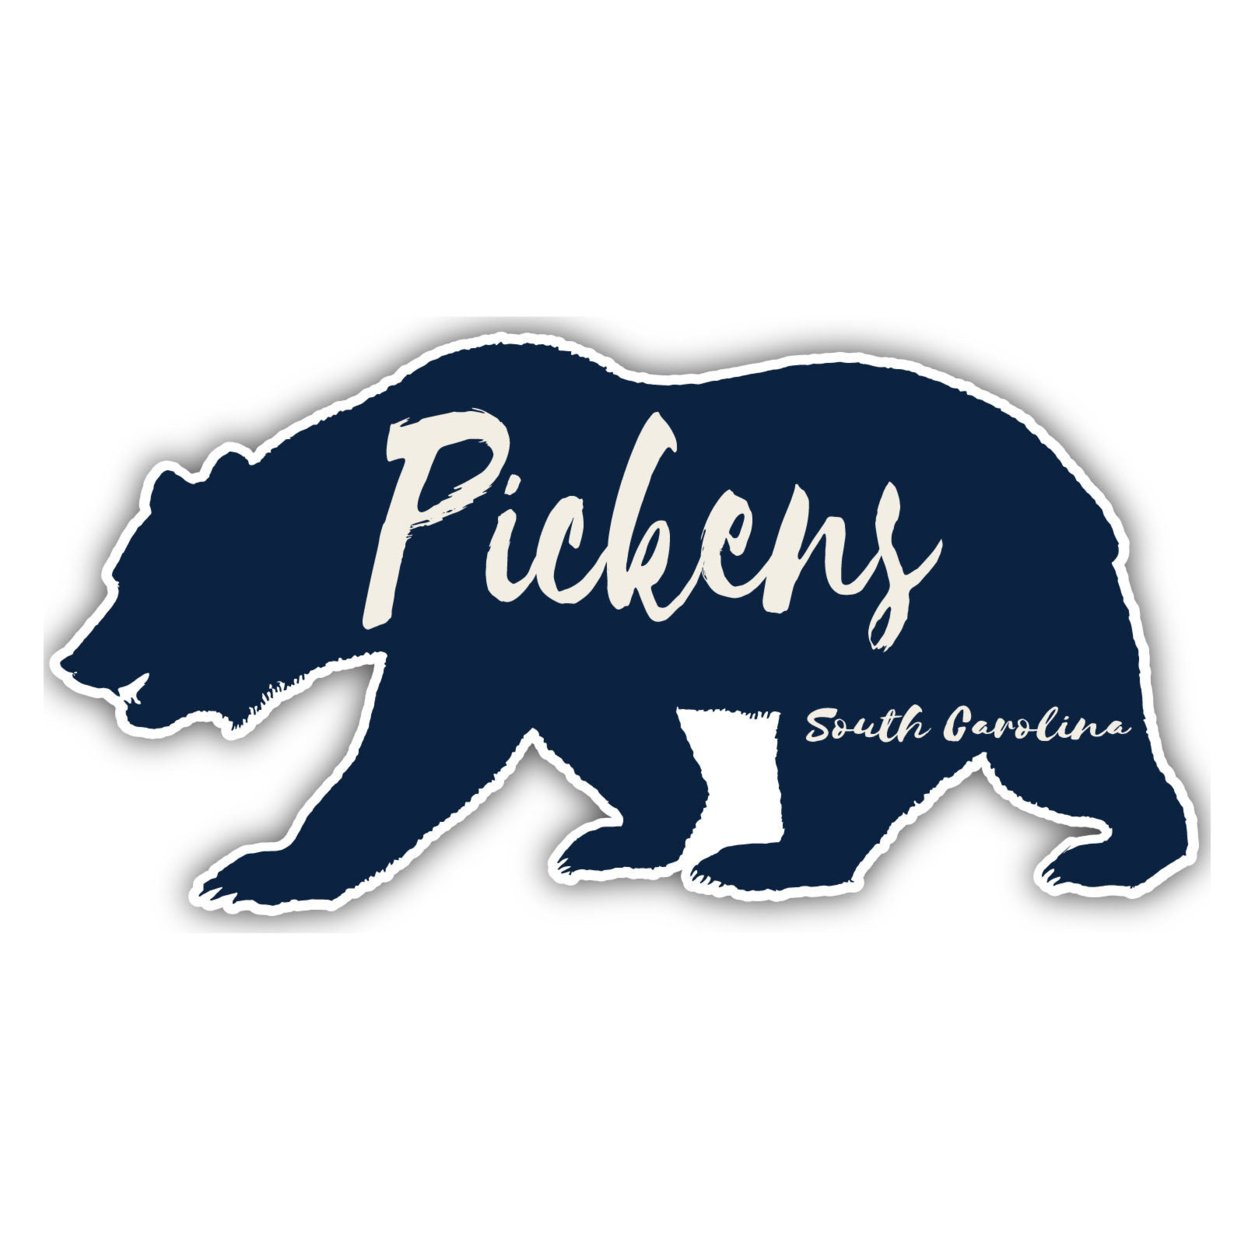 Pickens South Carolina Souvenir Decorative Stickers (Choose Theme And Size) - Single Unit, 2-Inch, Bear